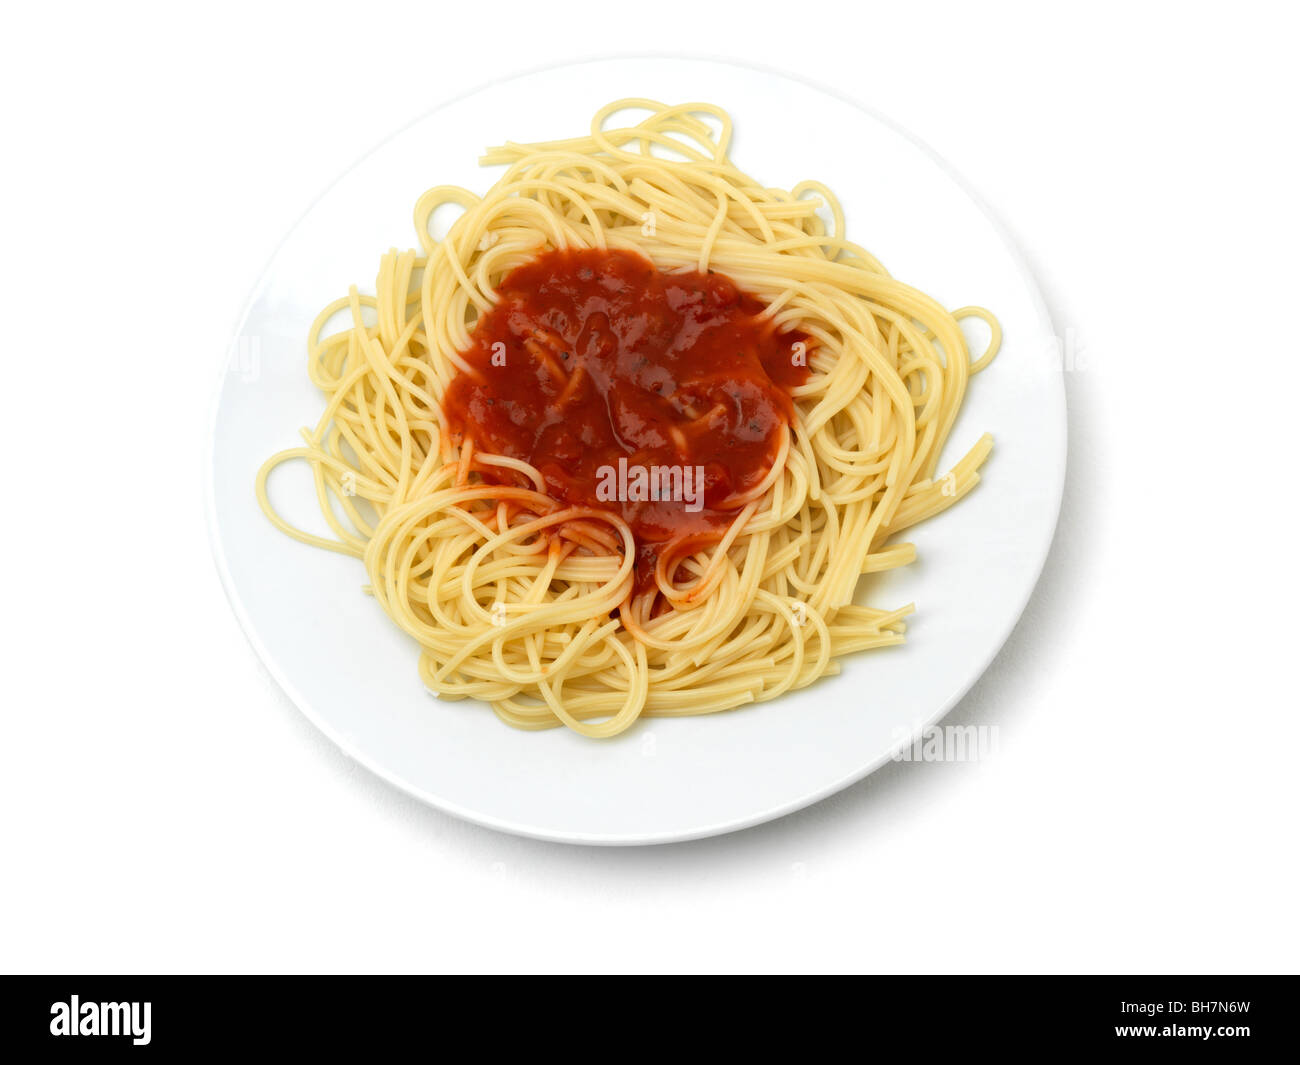 Plate of Spaghetti with tomato sauce Stock Photo